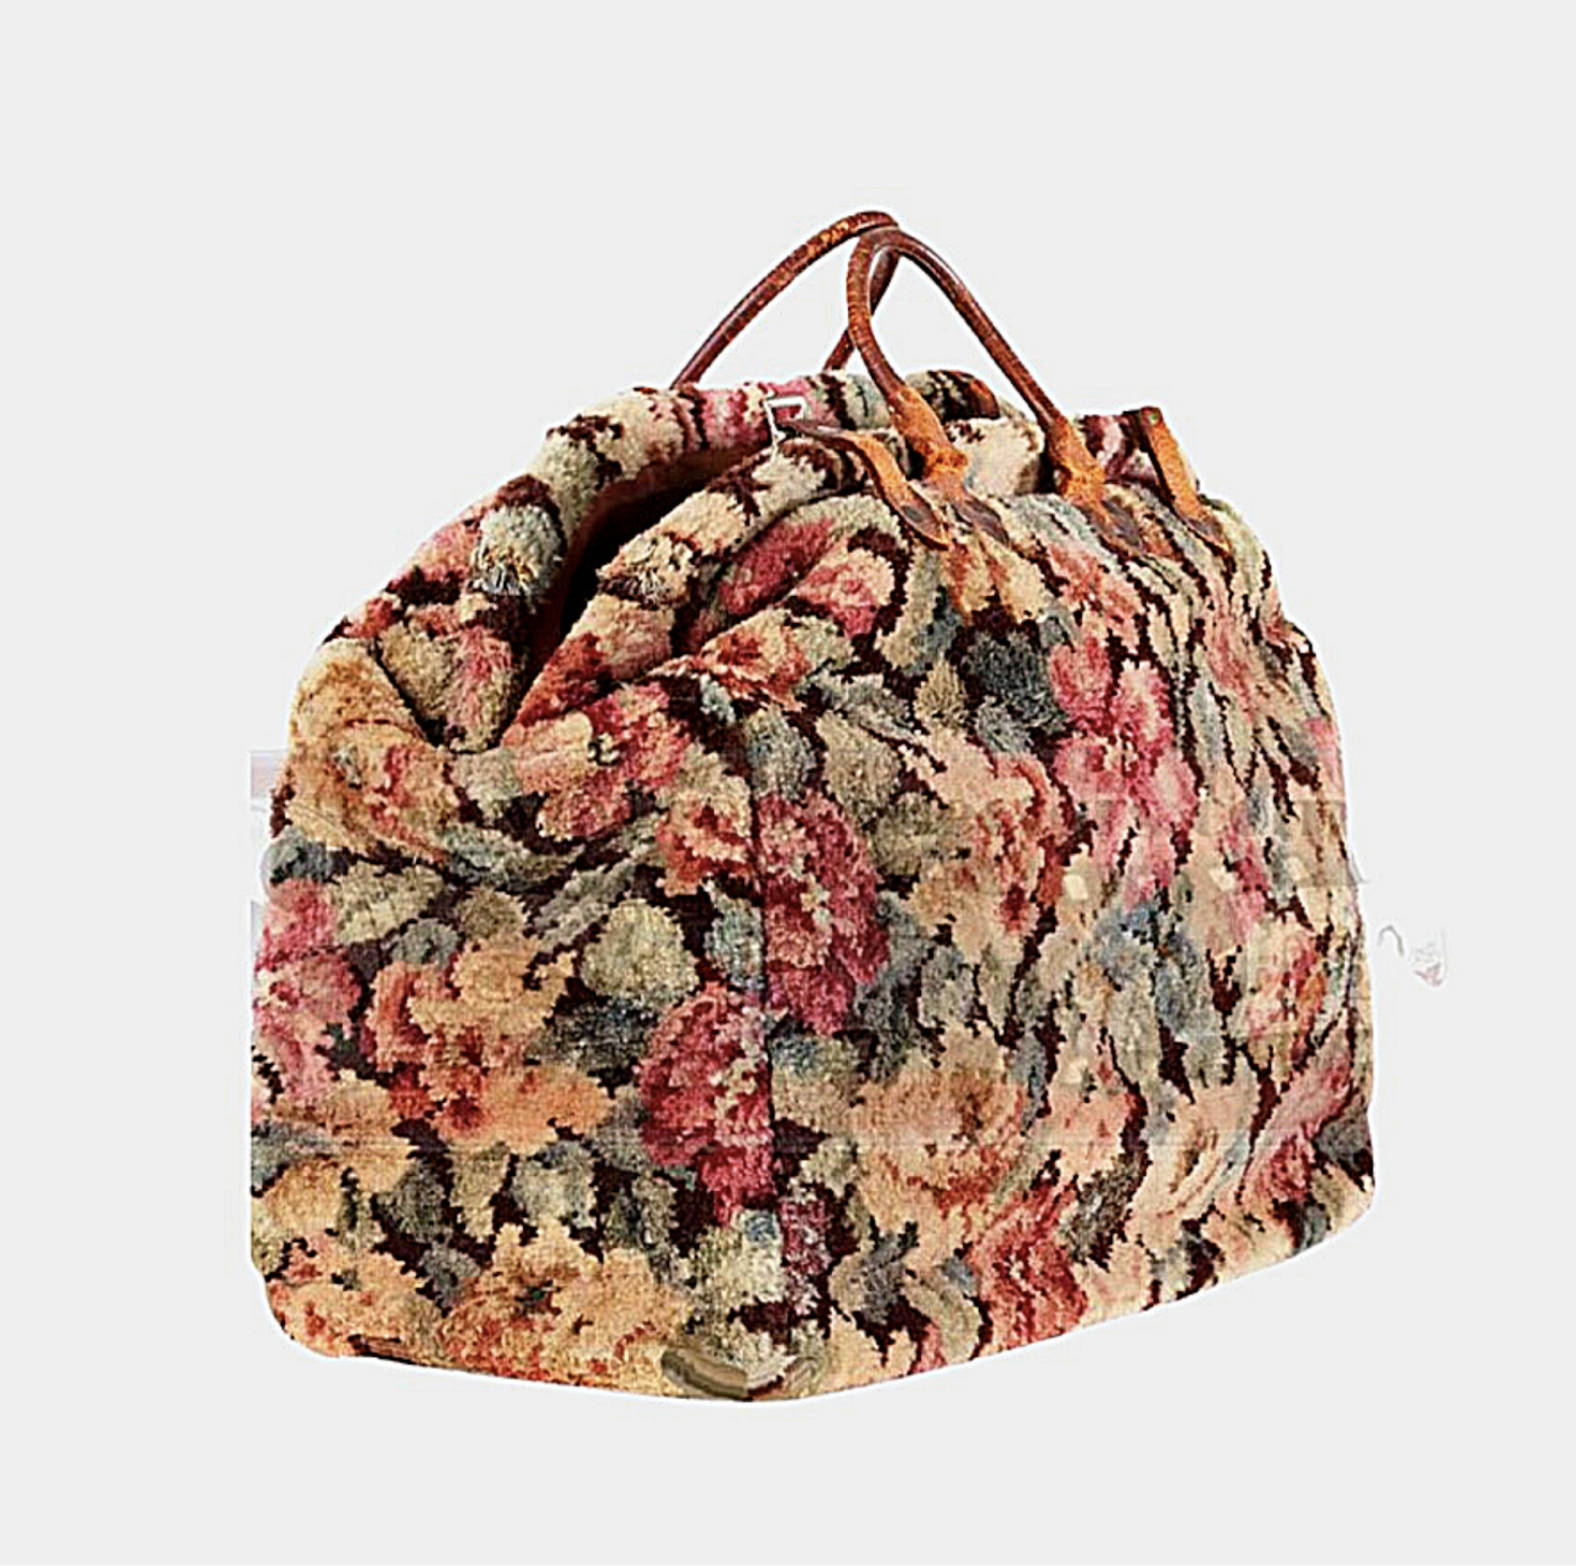 Mary Poppins carpet bag - The List 05 - Design Italy - Antonella Dedini